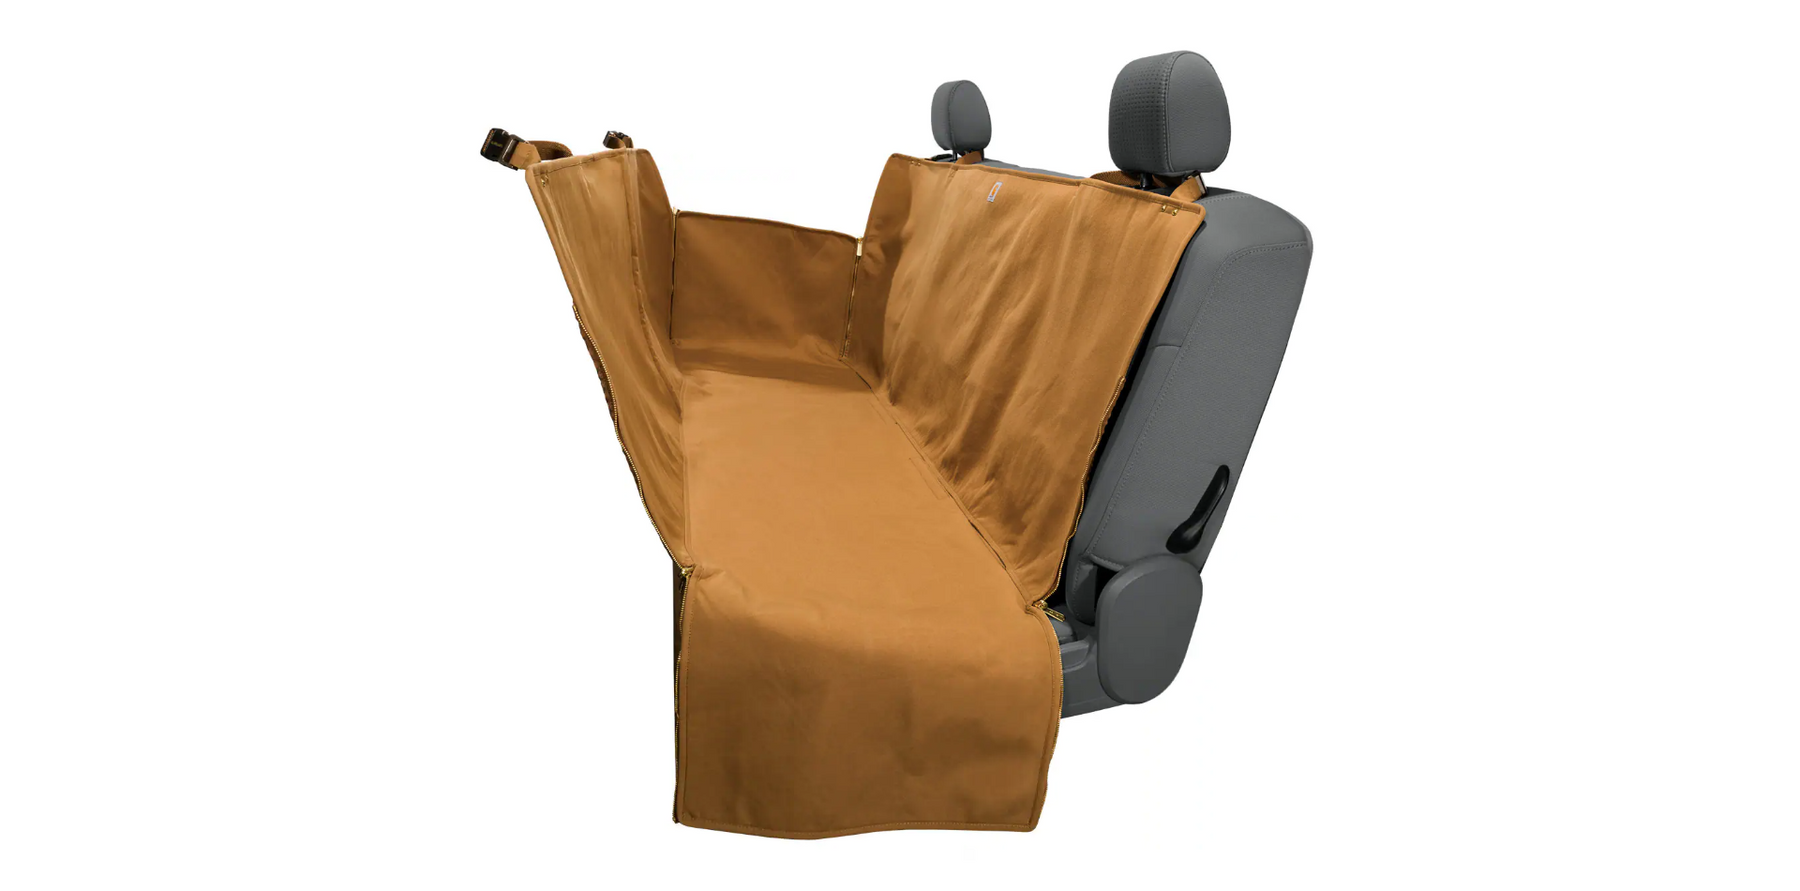 Carhartt Universal Hammock Seat Cover